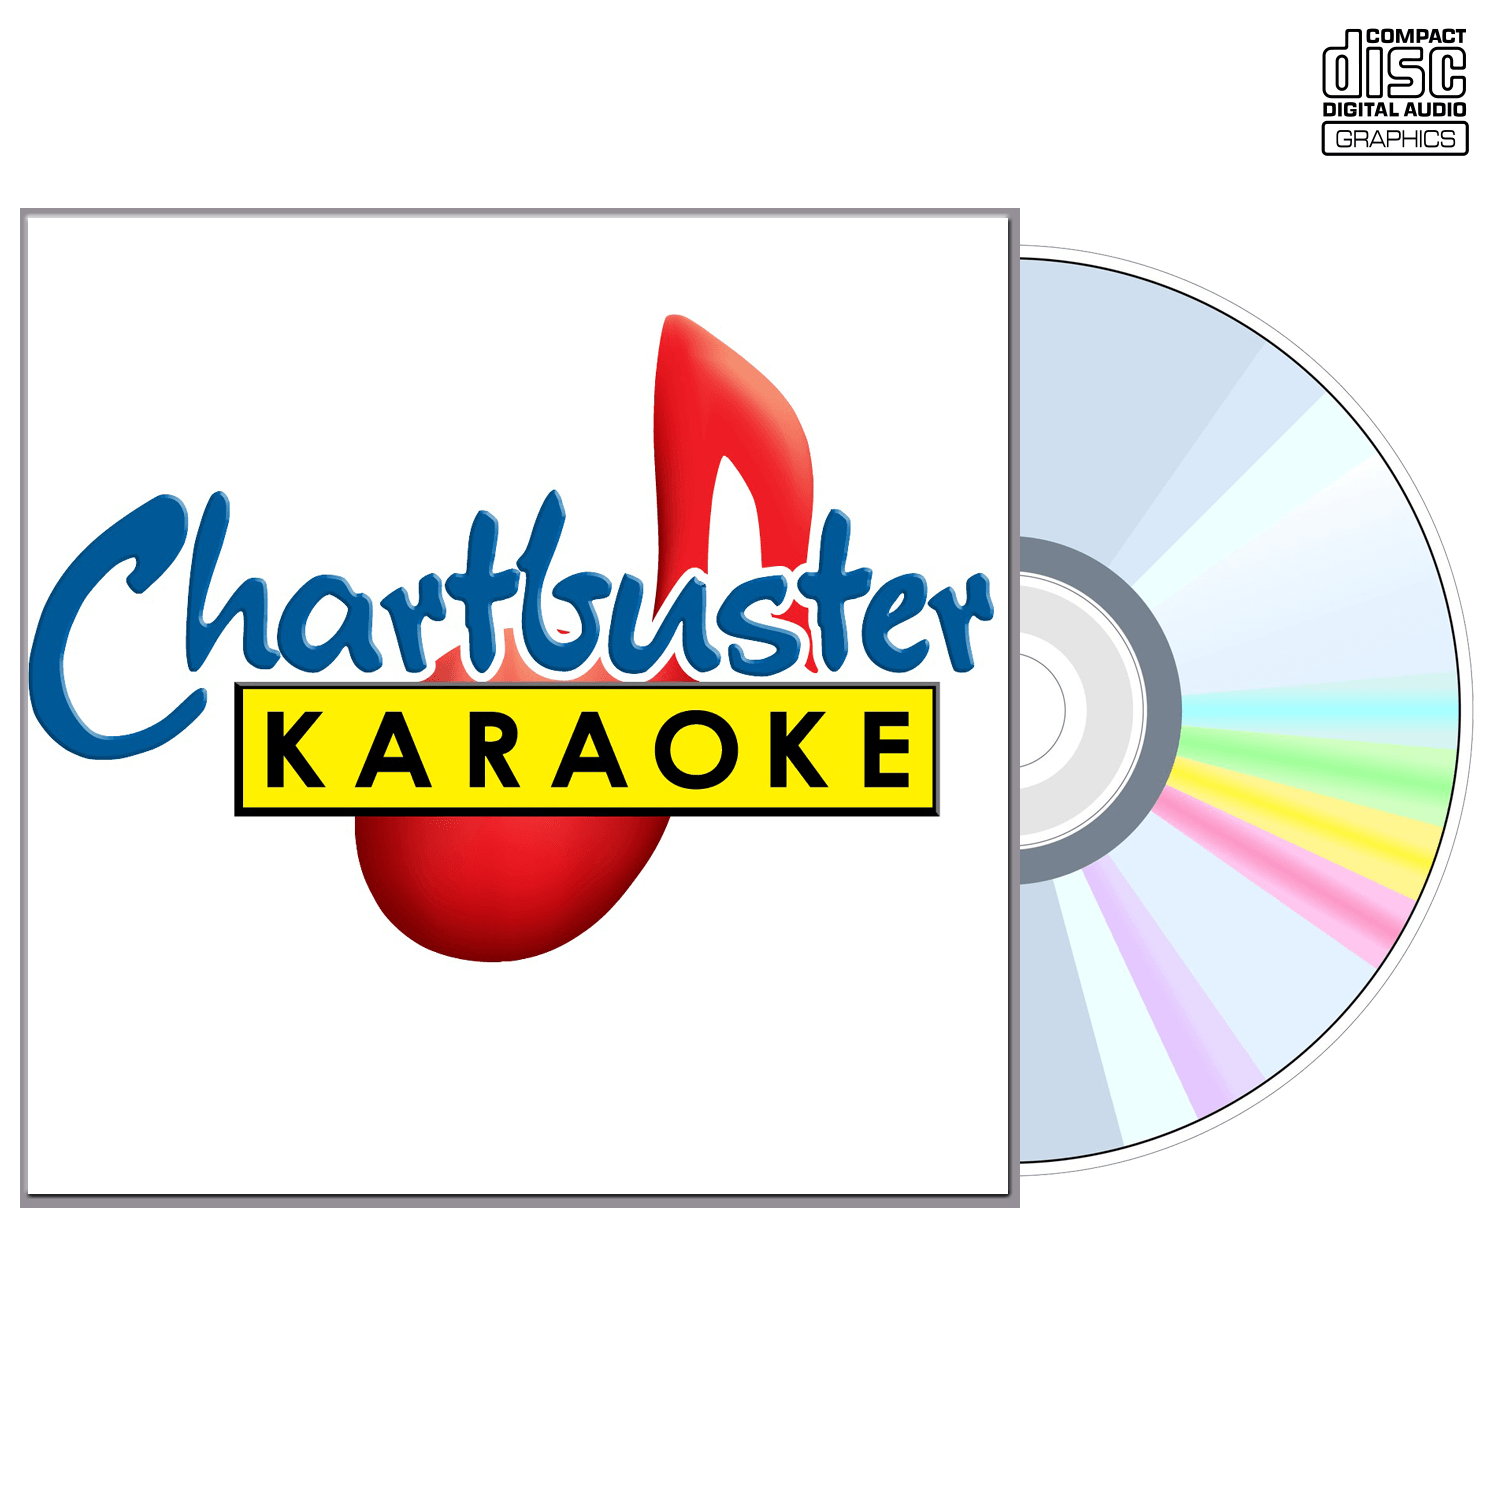 Best Mary Chapin Carpenter - CD+G - Chartbuster Karaoke - Karaoke Home Entertainment